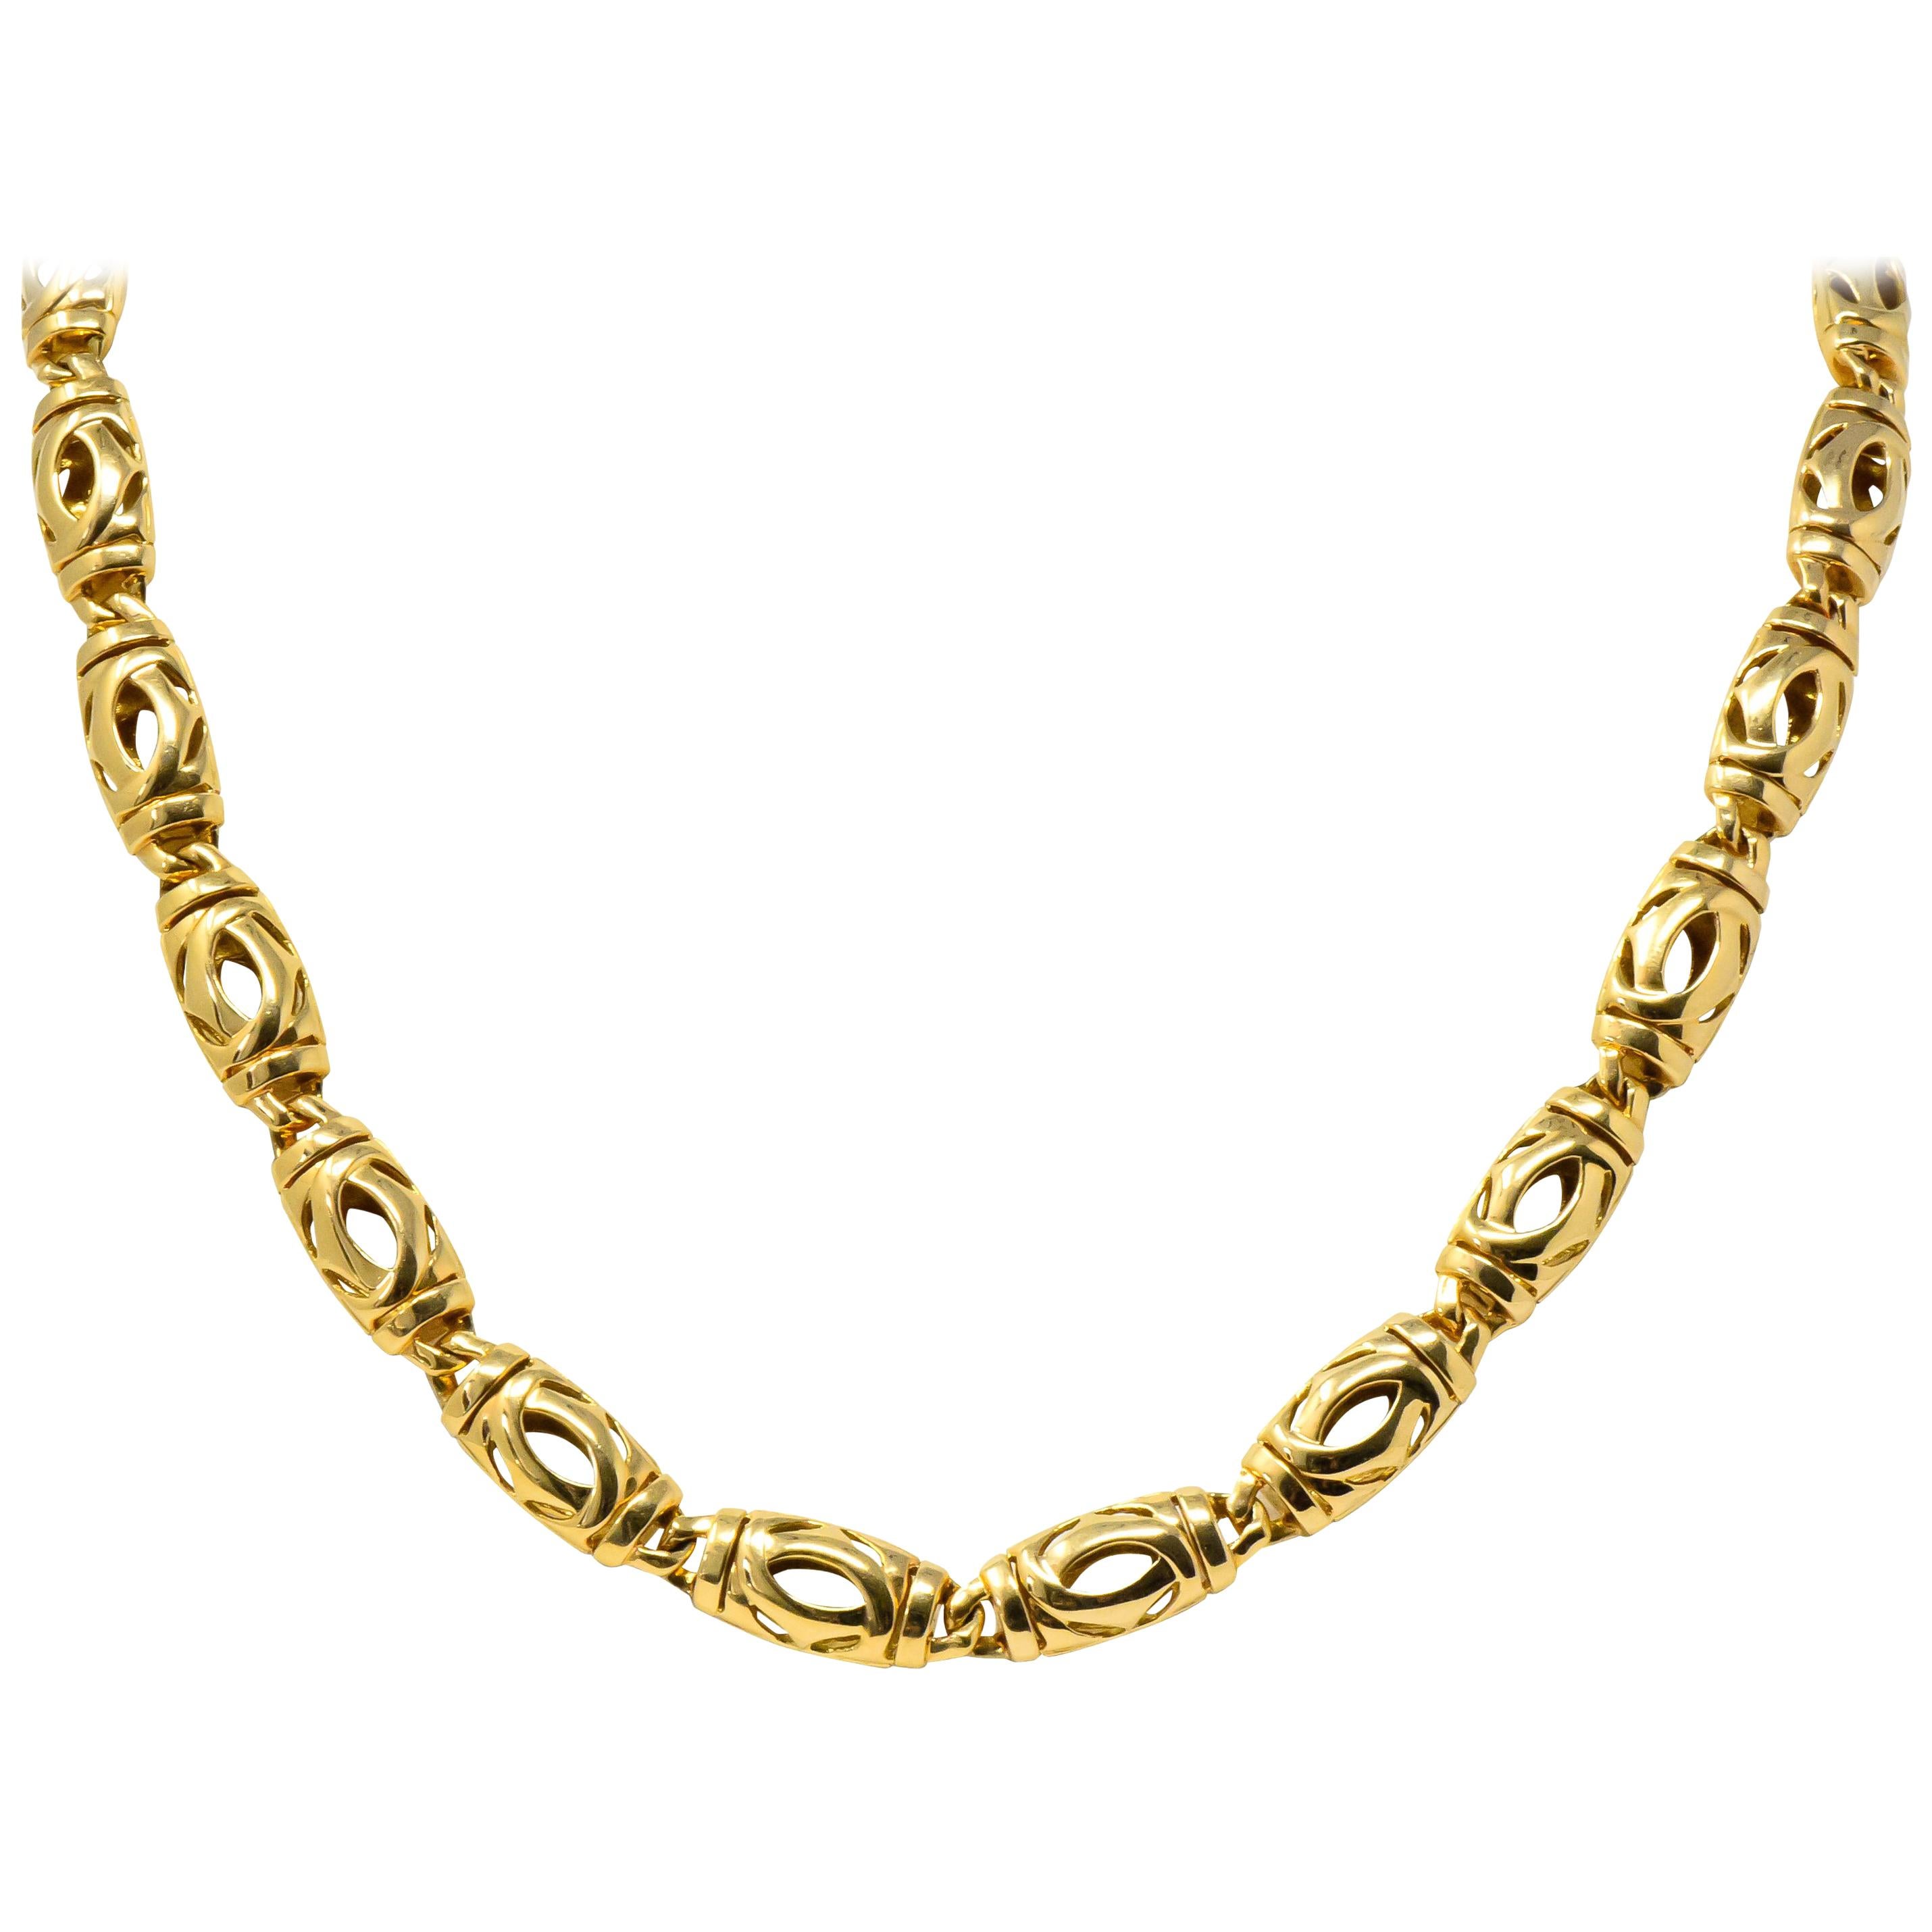 Cartier 18 Karat Gold Unisex Chain Necklace